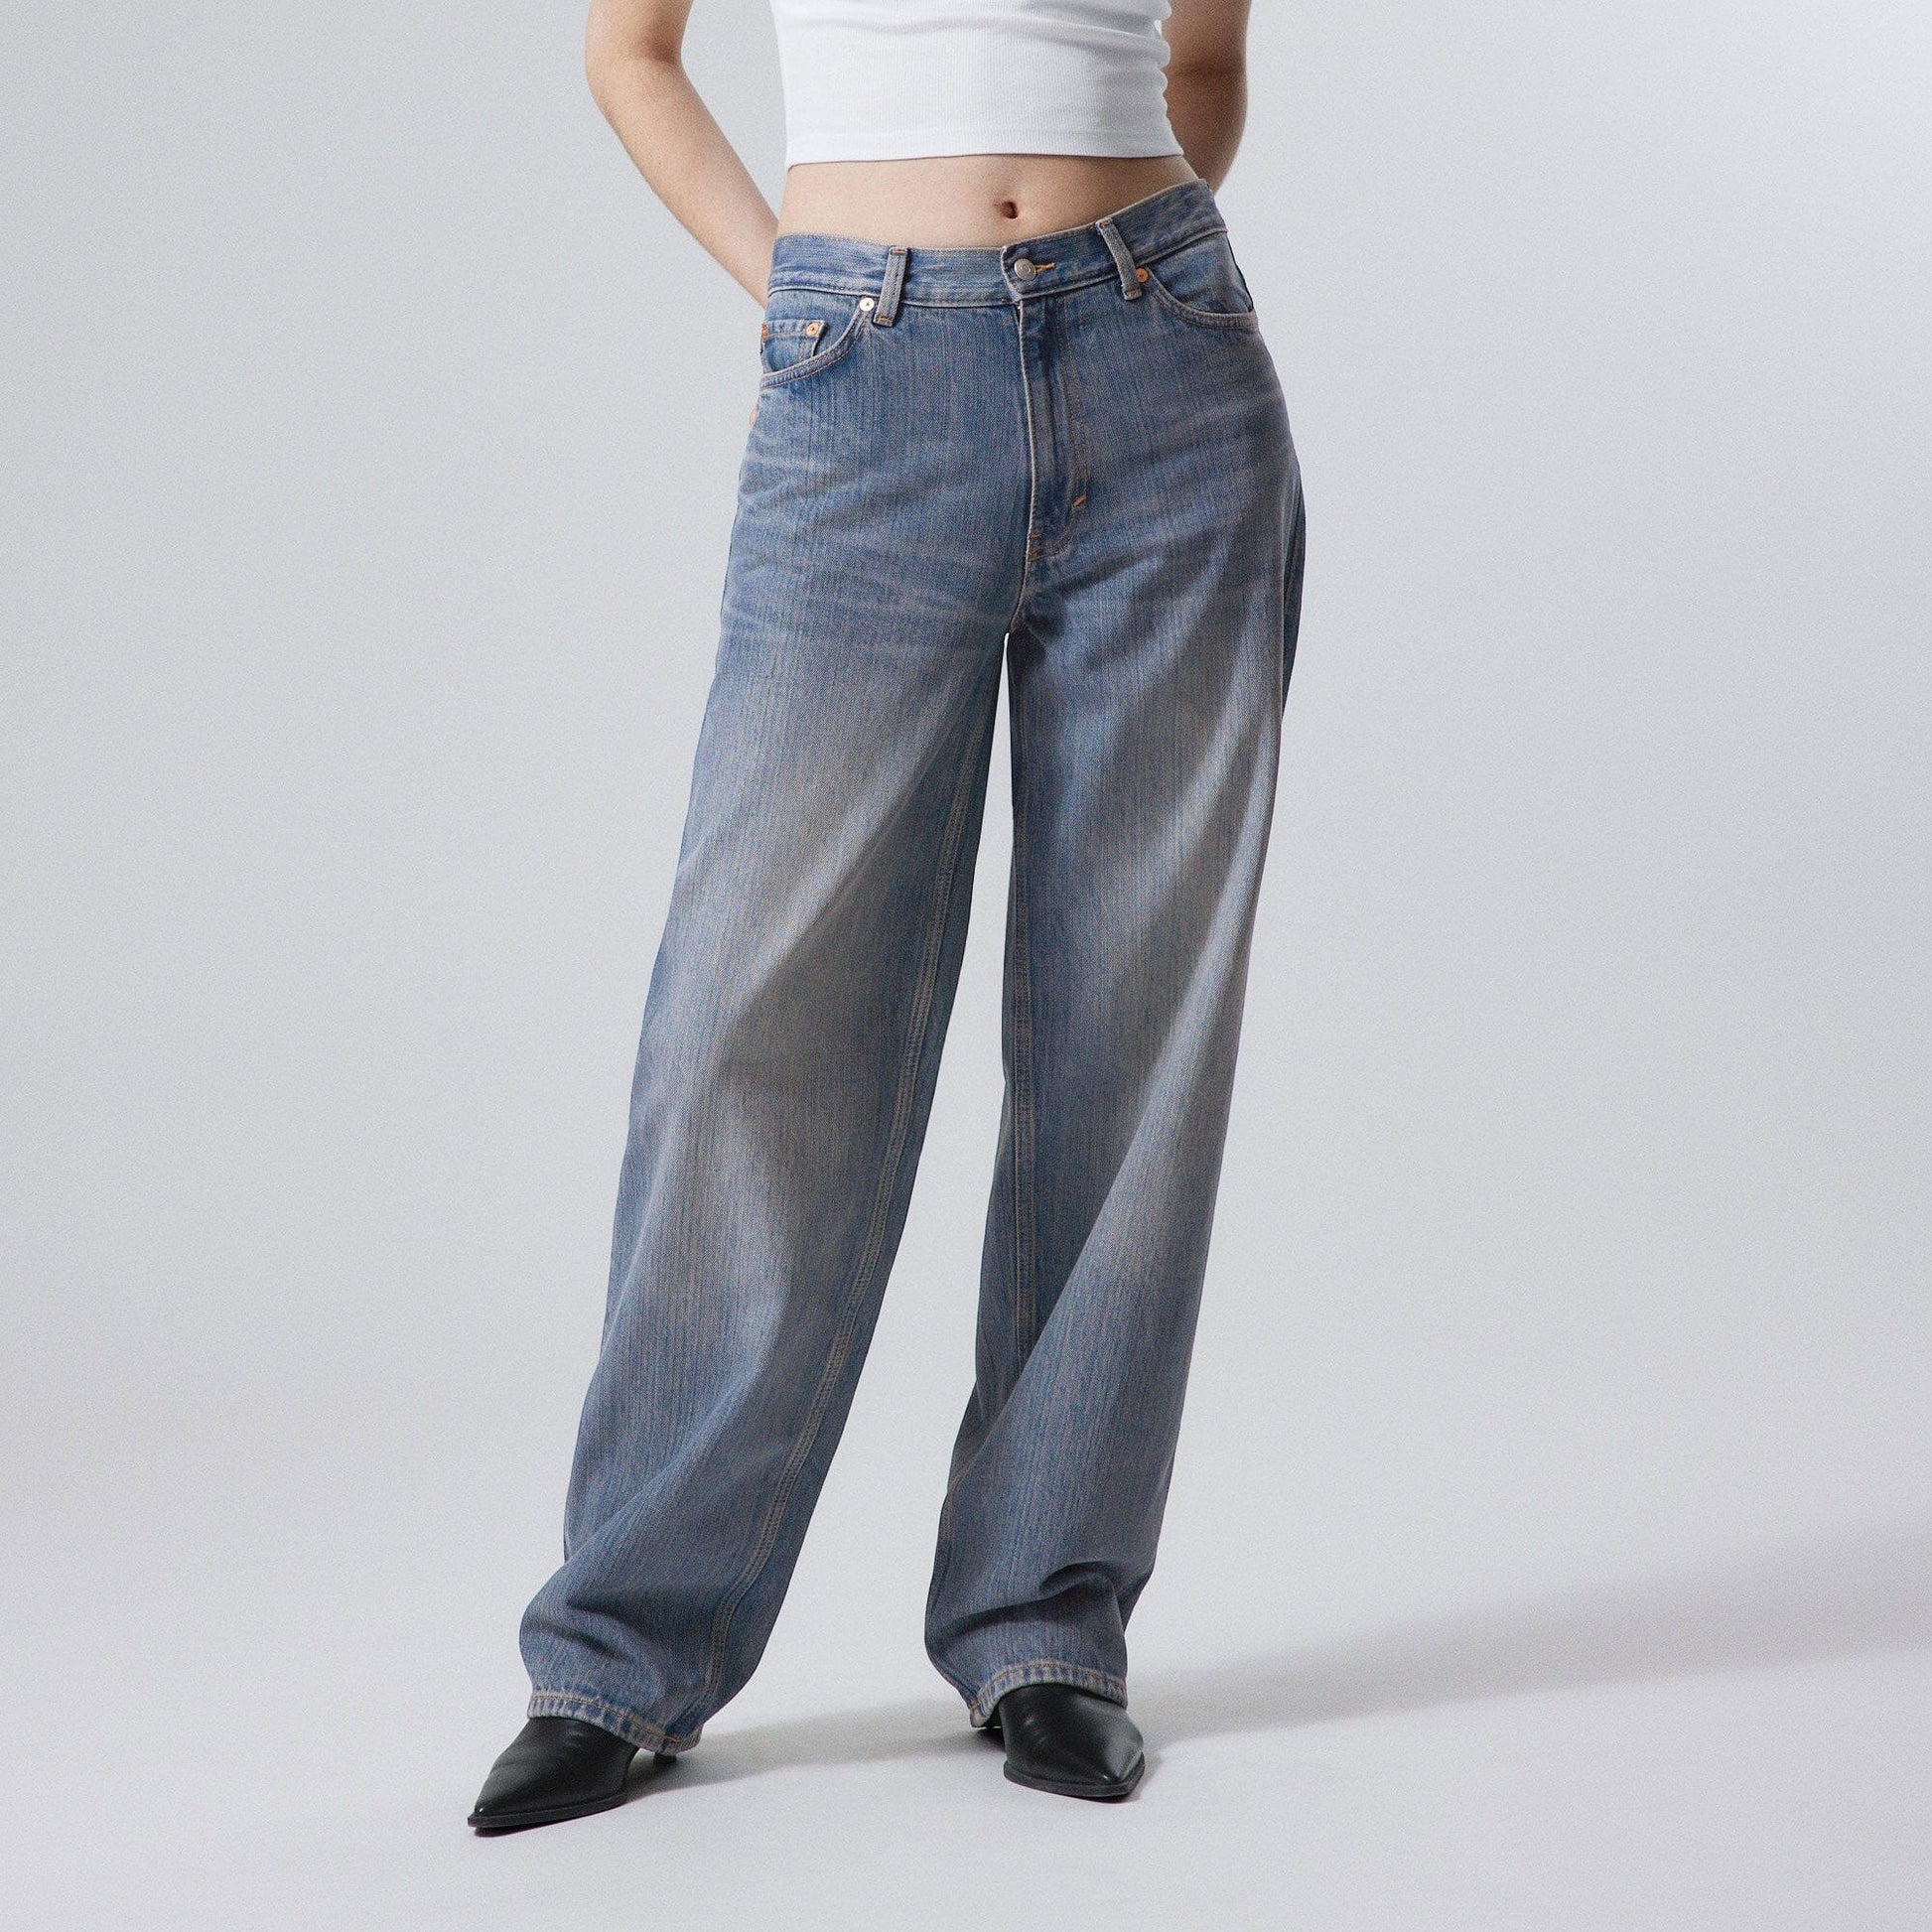 Weekday Women's Straight Fit Boot Cut Classic Denim Jeans Women's Denim HAS Apparel Blue 24 28